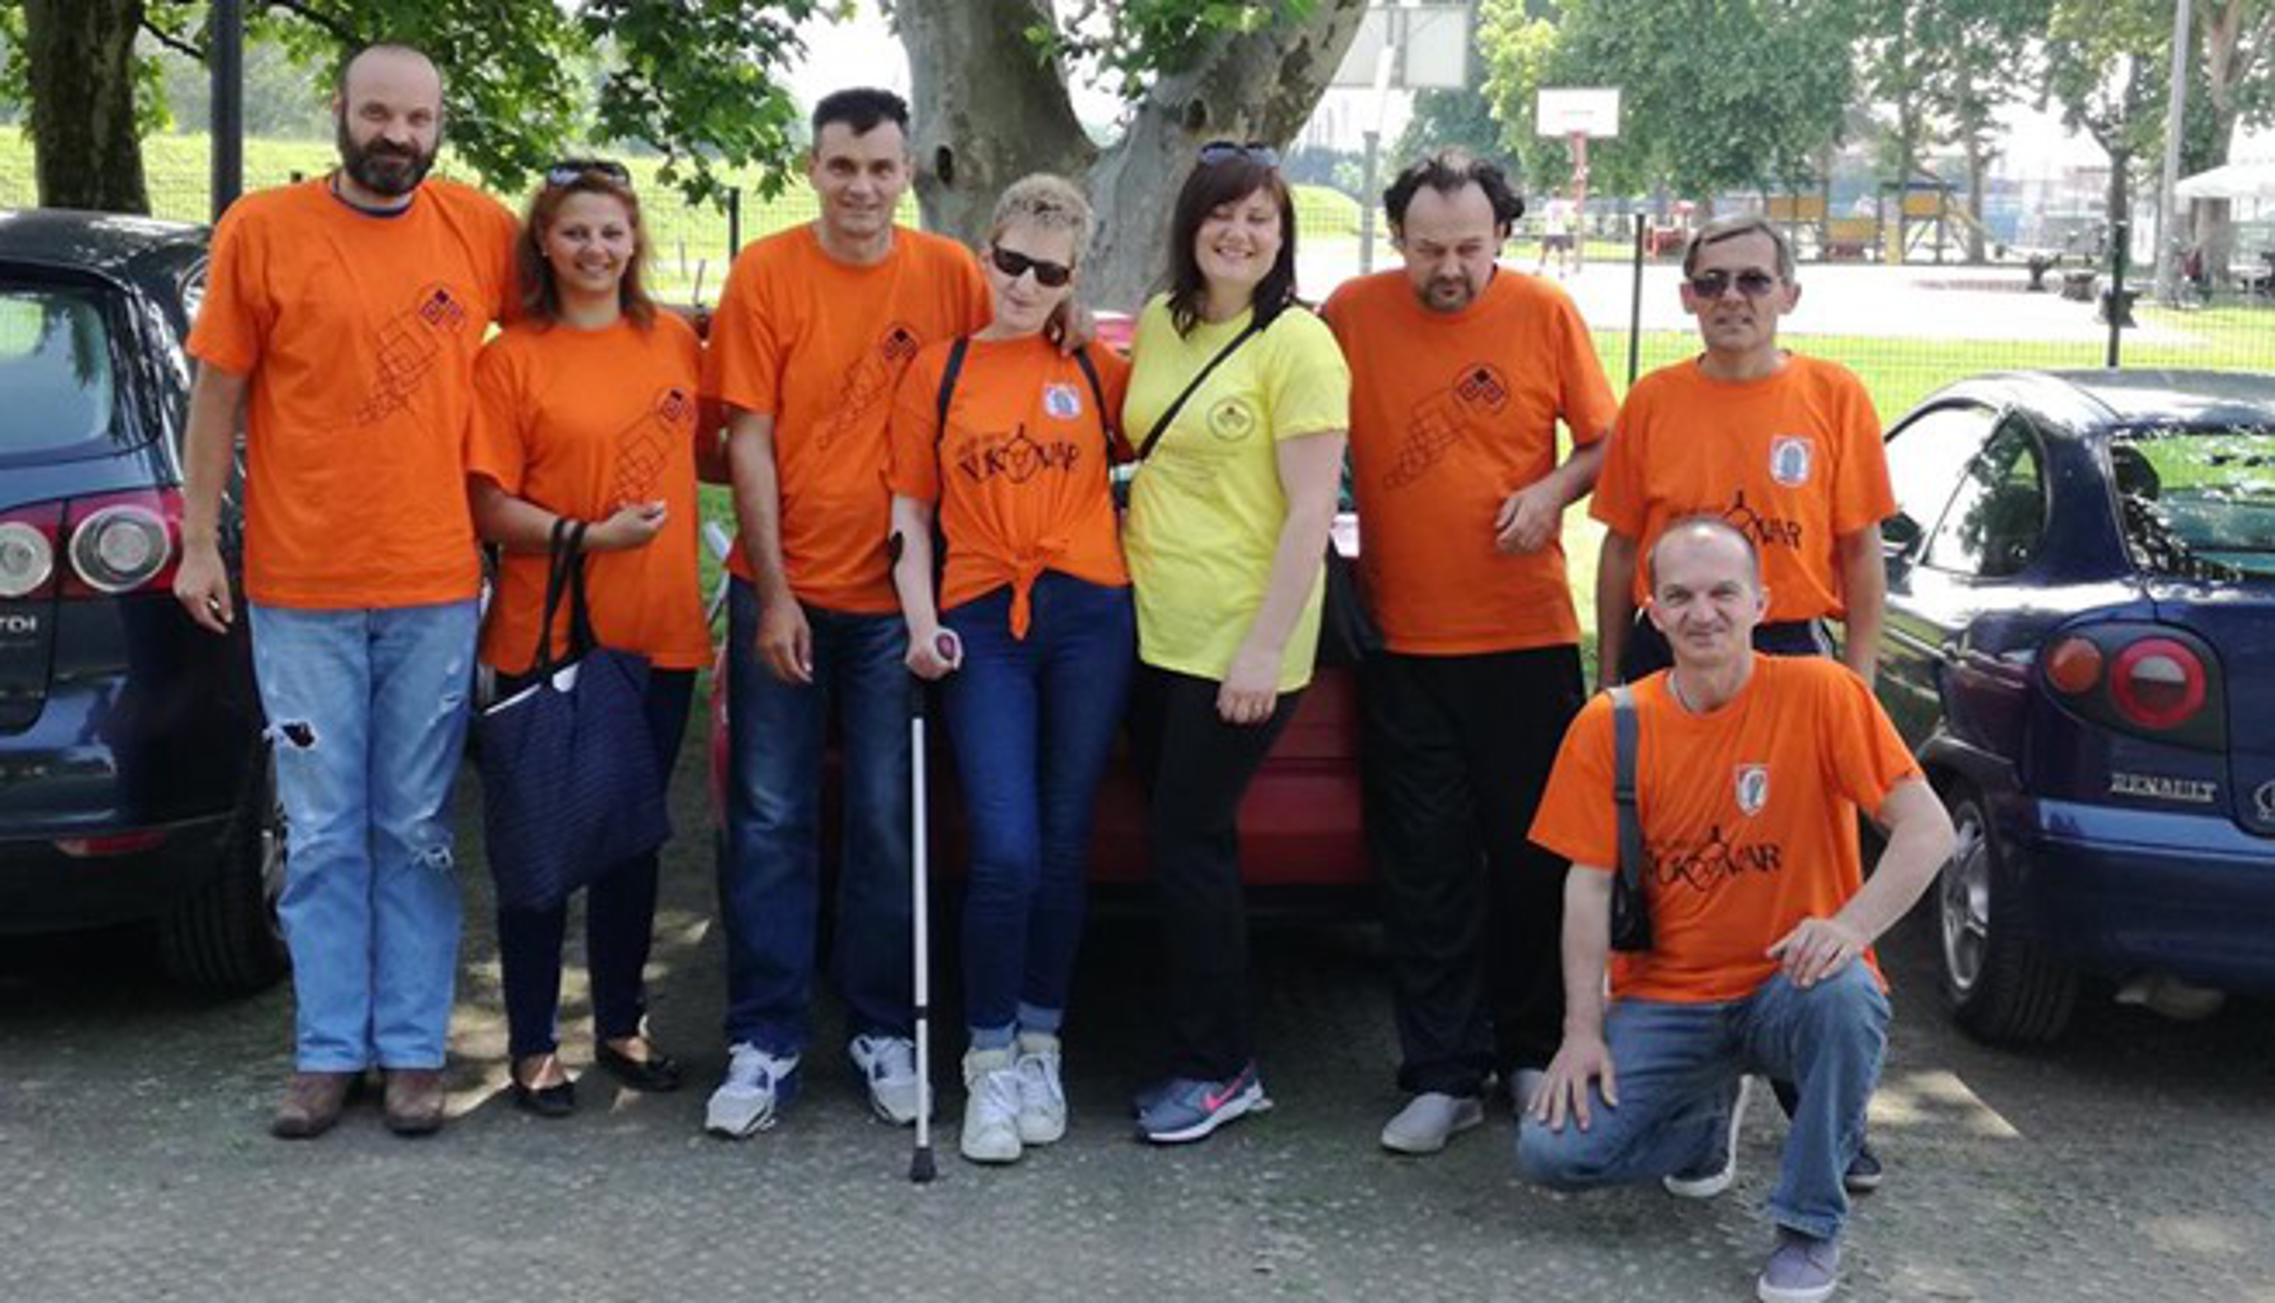 Članovi Društva multiple skleroze Požega